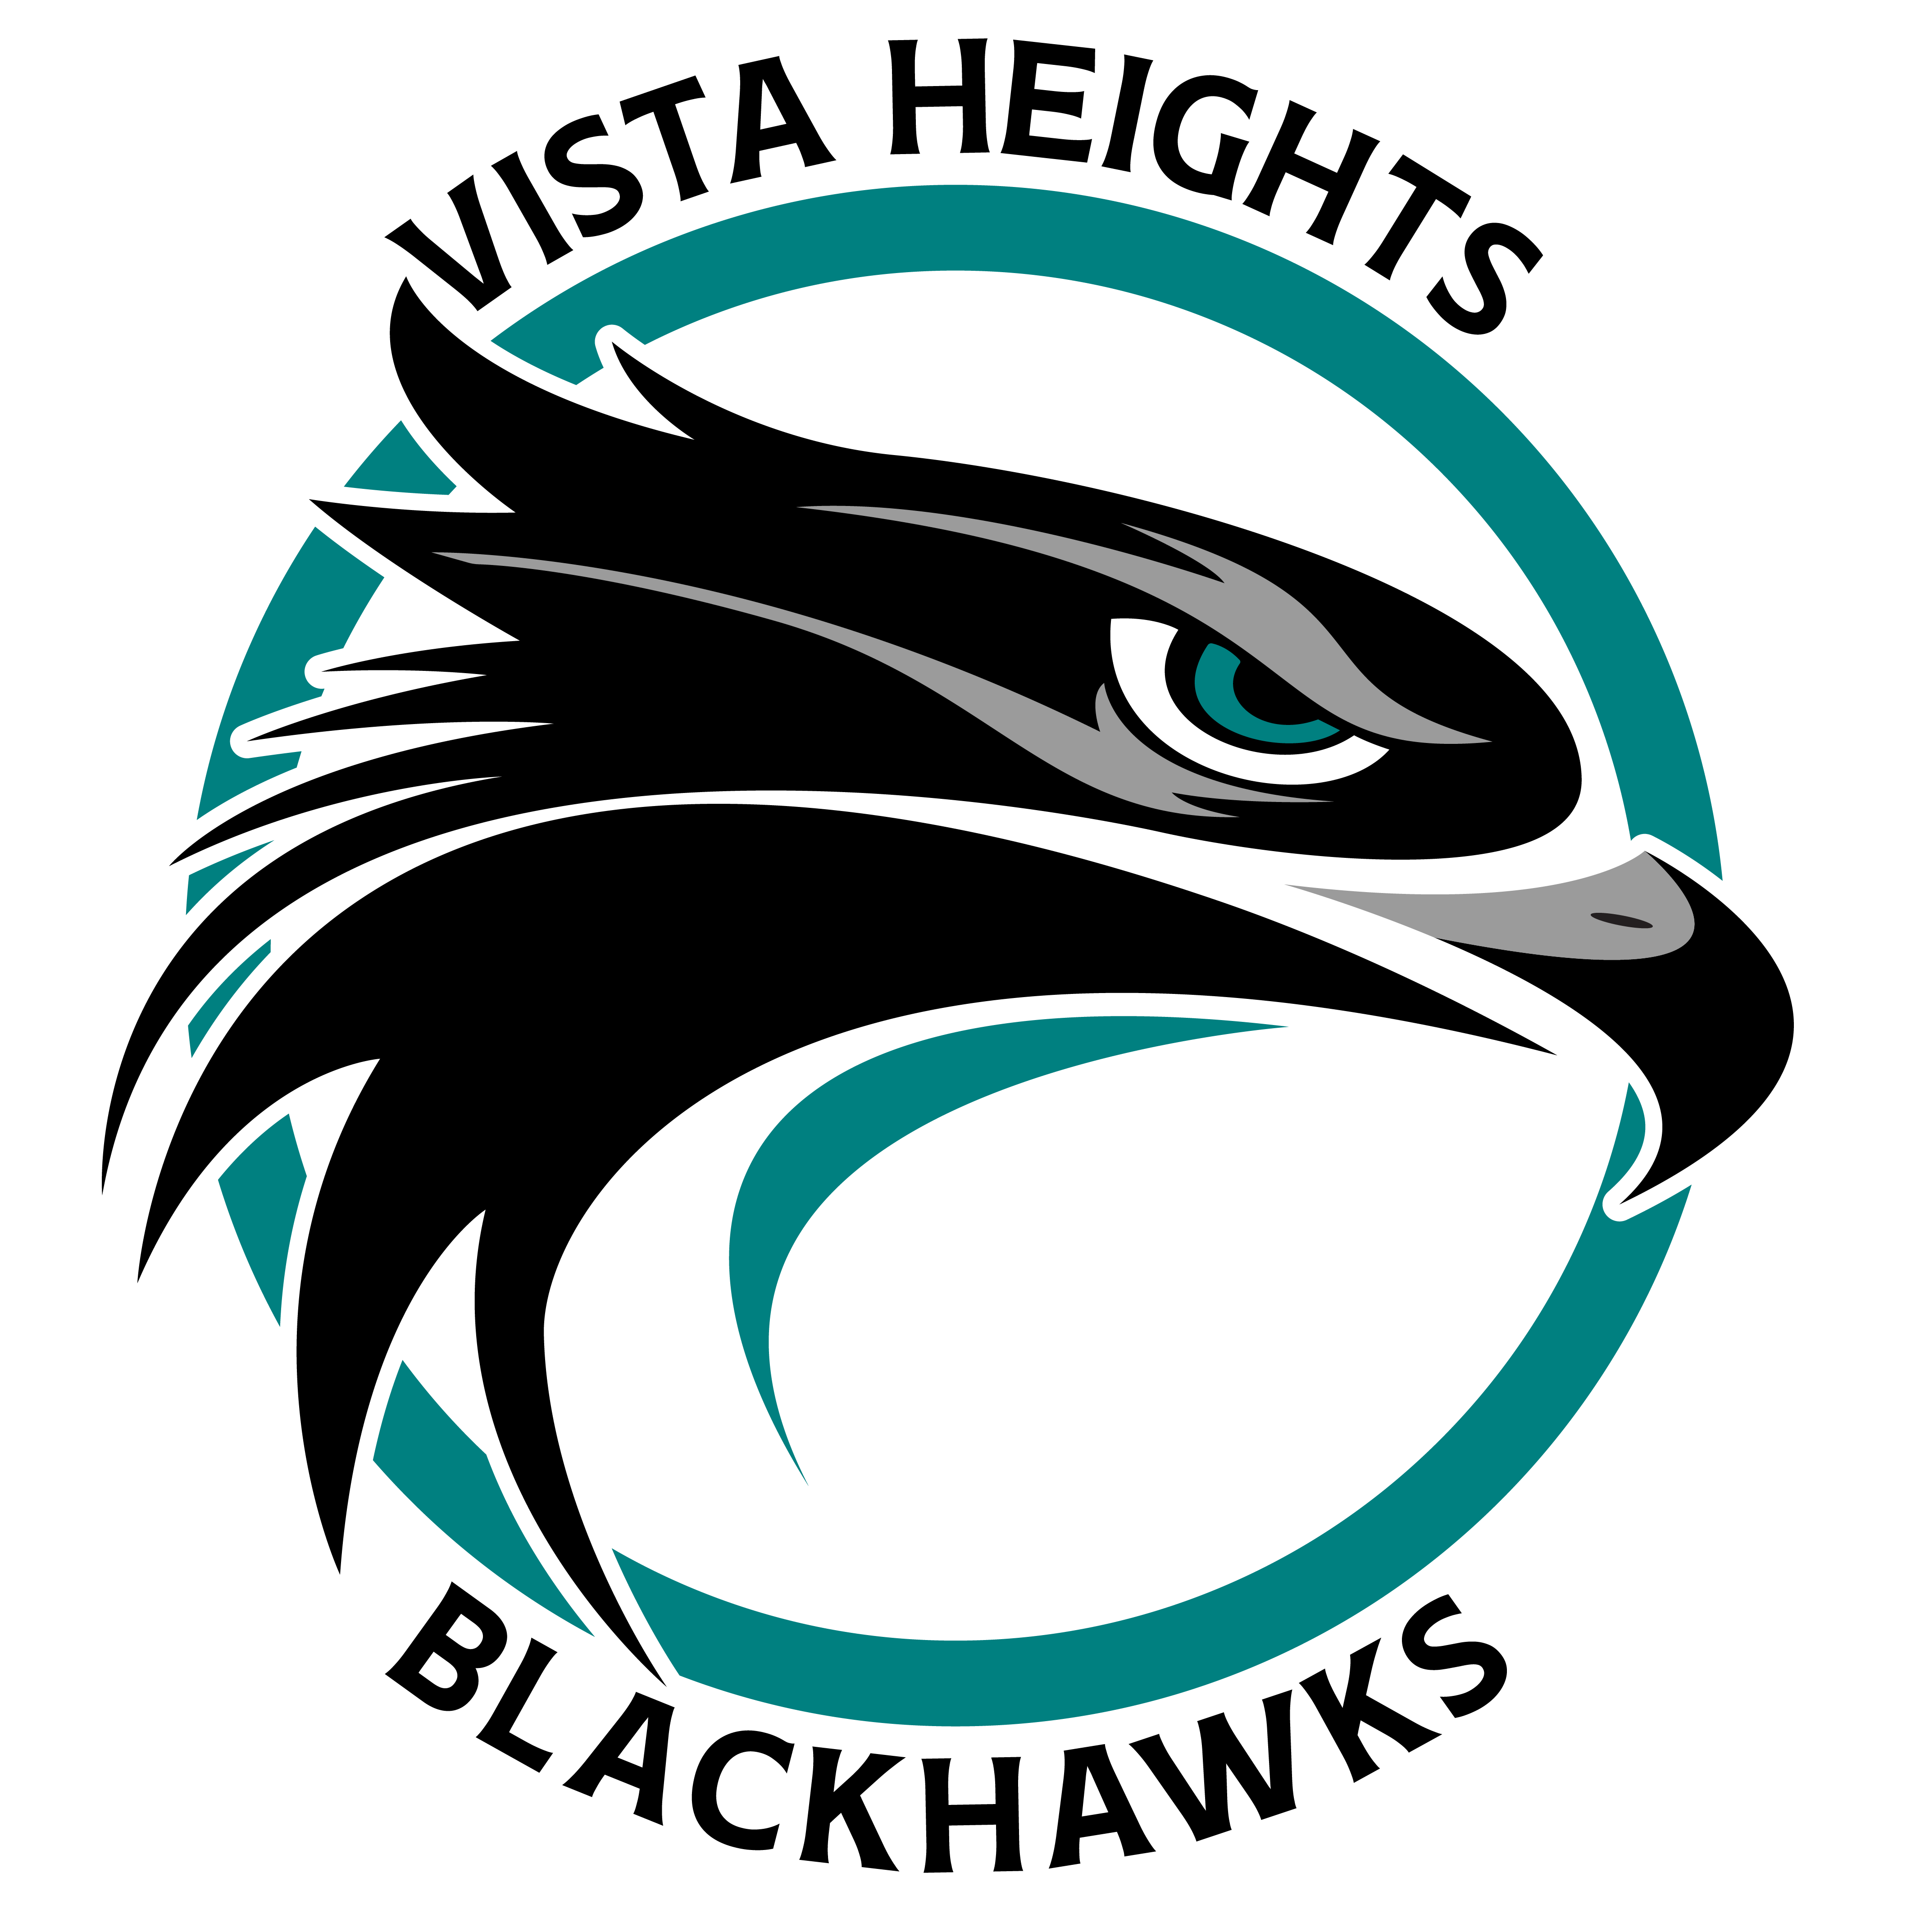 Vista Heights Middle School